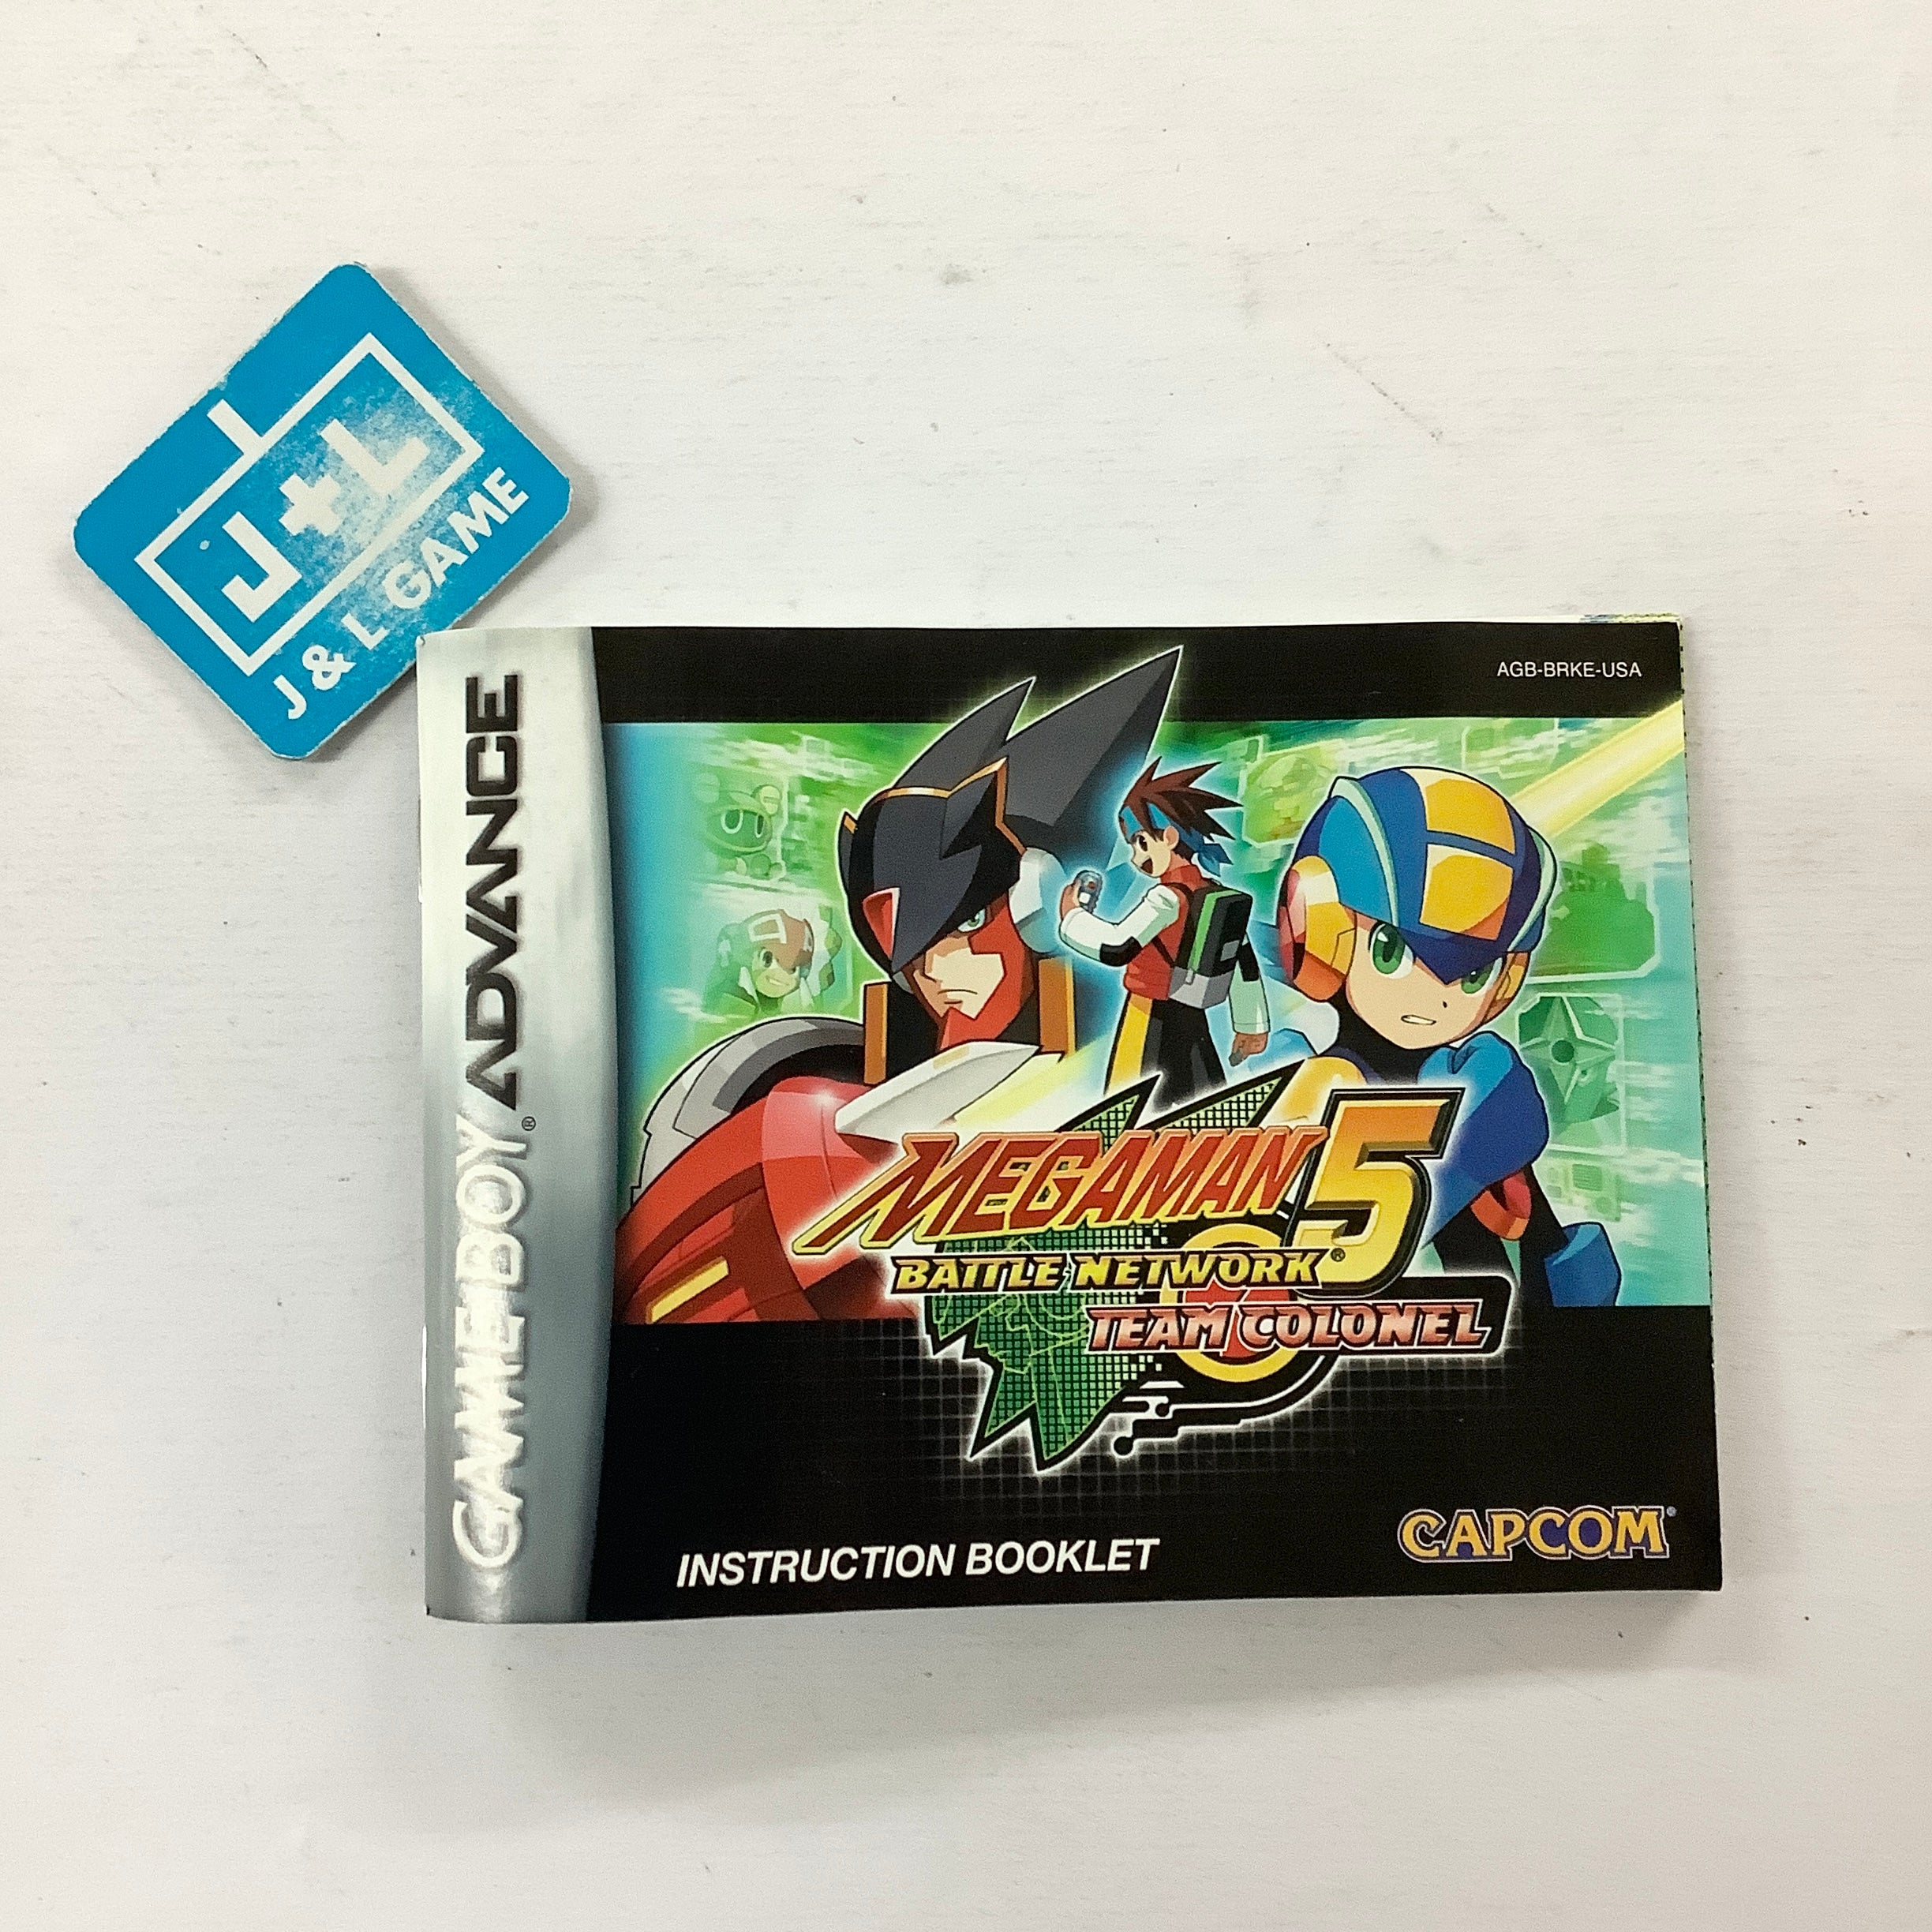 Mega Man Battle Network 5: Team Colonel - (GBA) Game Boy Advance [Pre-Owned] Video Games Capcom   